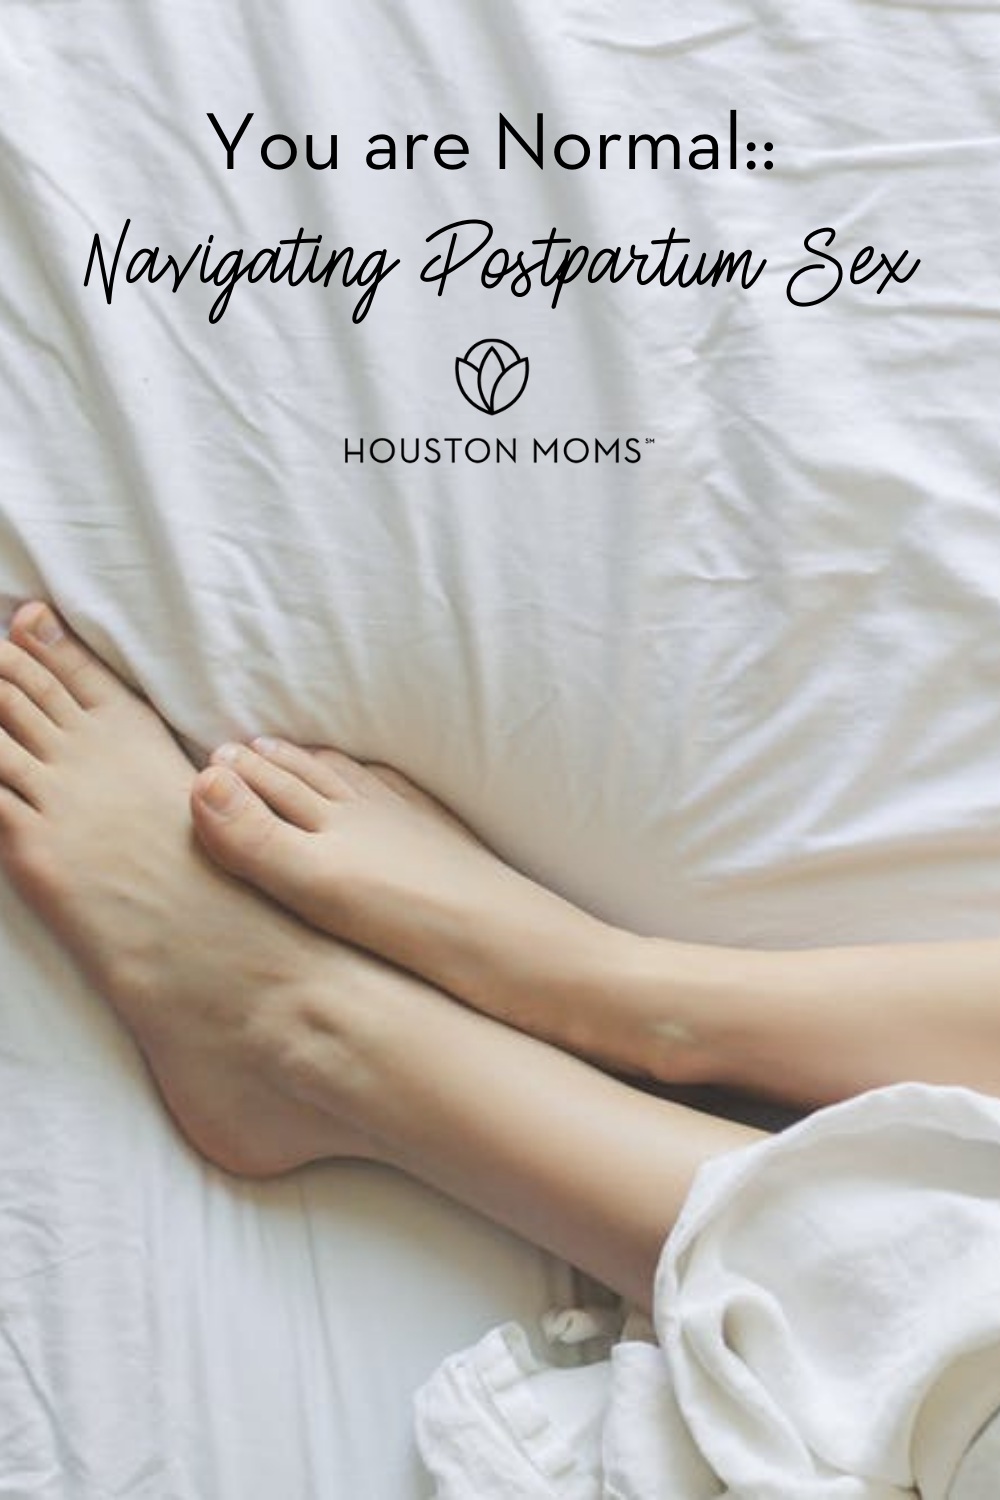 Houston Moms "You are Normal:: Navigating Postpartum Sex" #houstonmoms #houstonmomsblog #momsaroundhouston